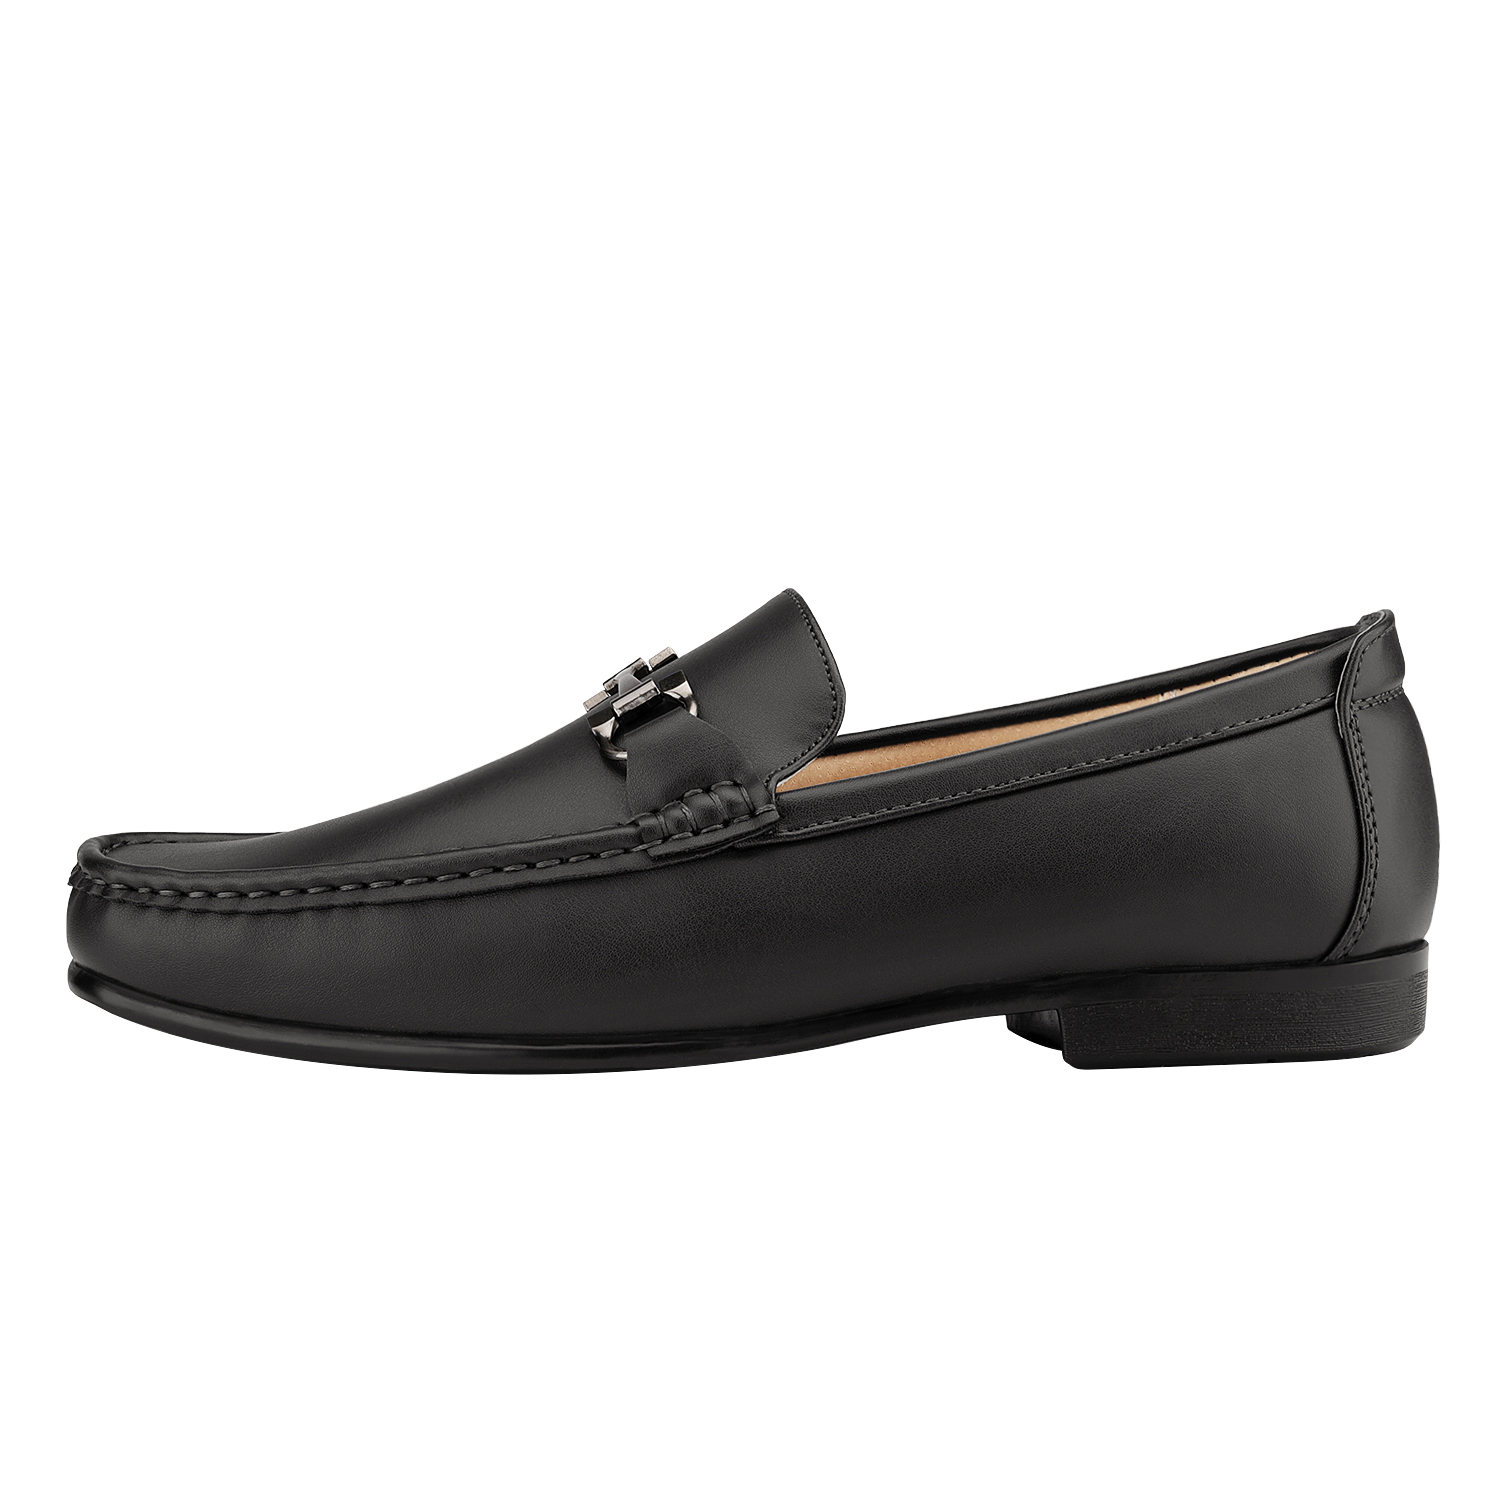 Bruno Marc Men's Moccasin Loafer Shoes Men Dress Loafers Slip On Casual Penny Comfort Outdoor Loafers HENRY-1 BLACK Size 9 - image 4 of 5